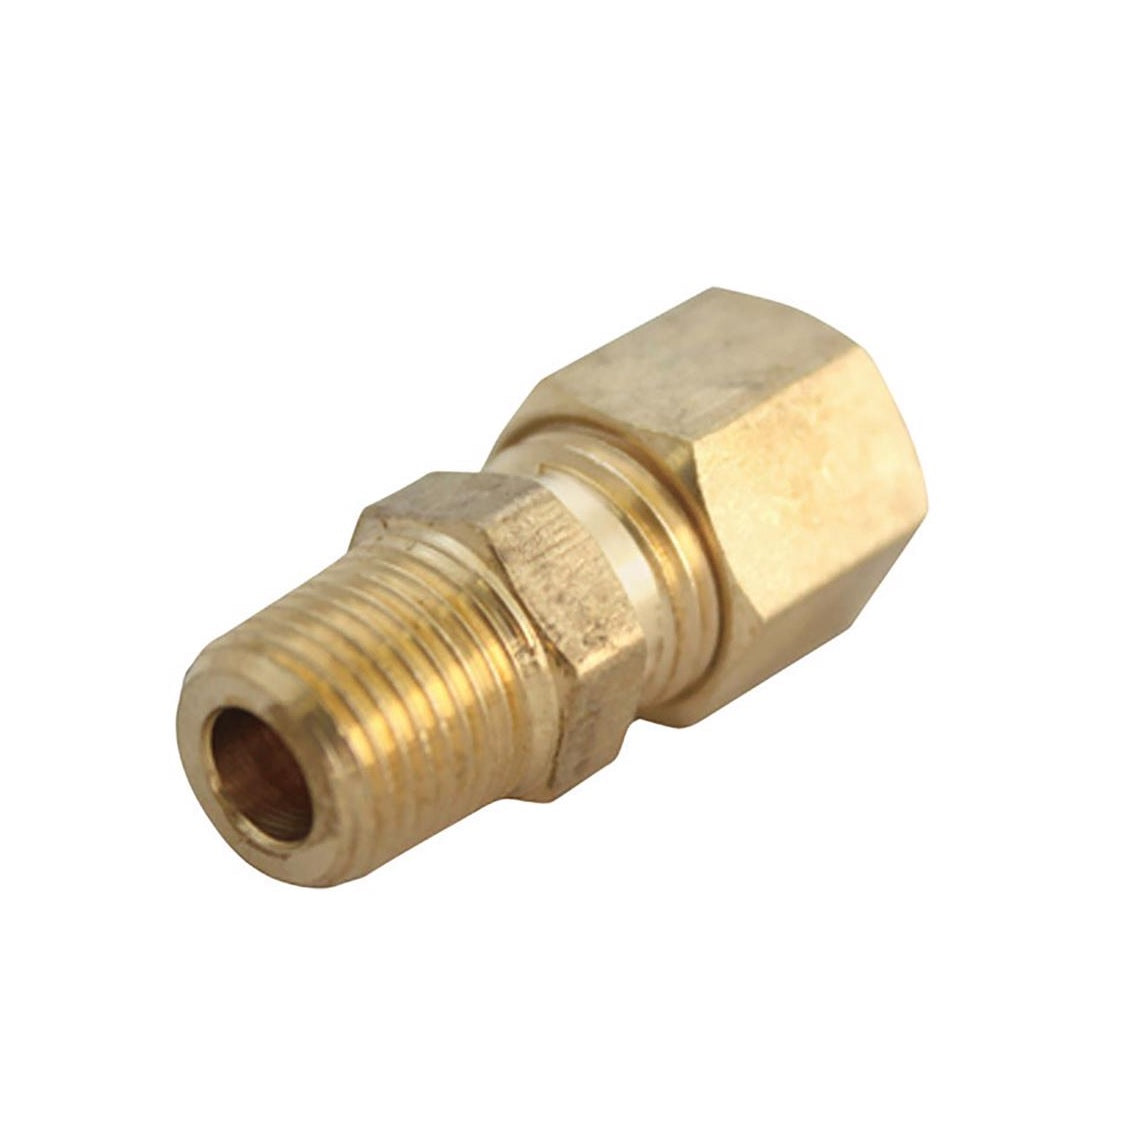 Homeplus+ 6JC120110701024 Compression Male Connector, Brass